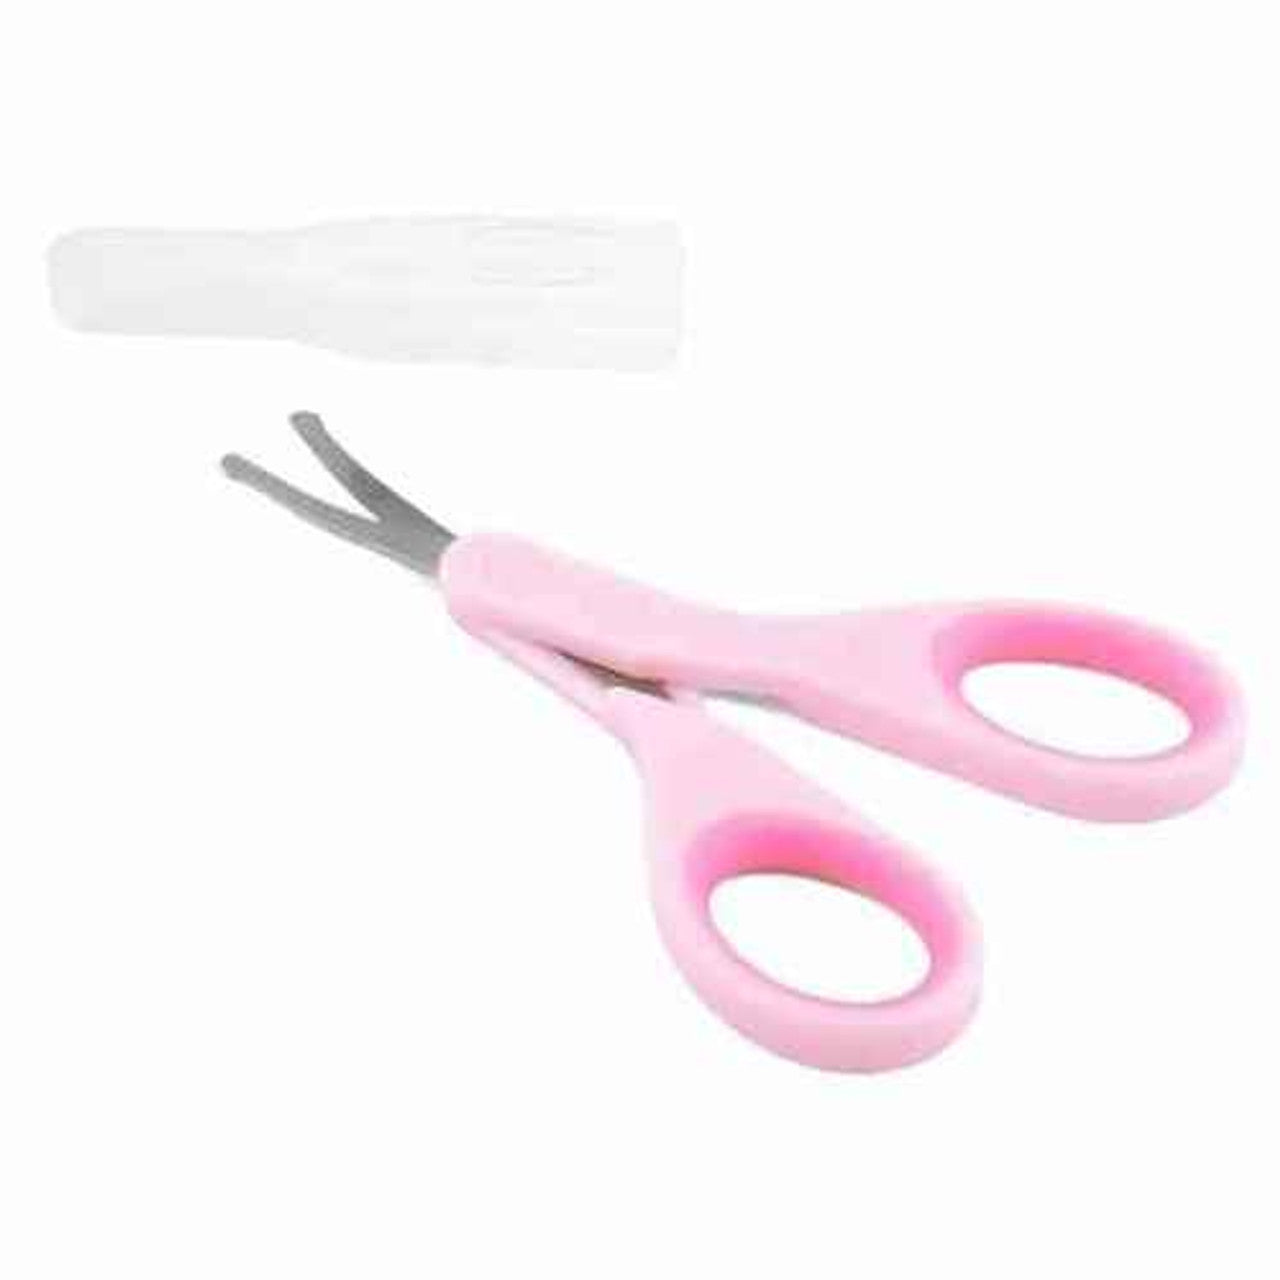 Amazon.com: Chicco Kids Manicure Set Scissors, Nail Clippers, Tweezers,  File, Panda : Beauty & Personal Care